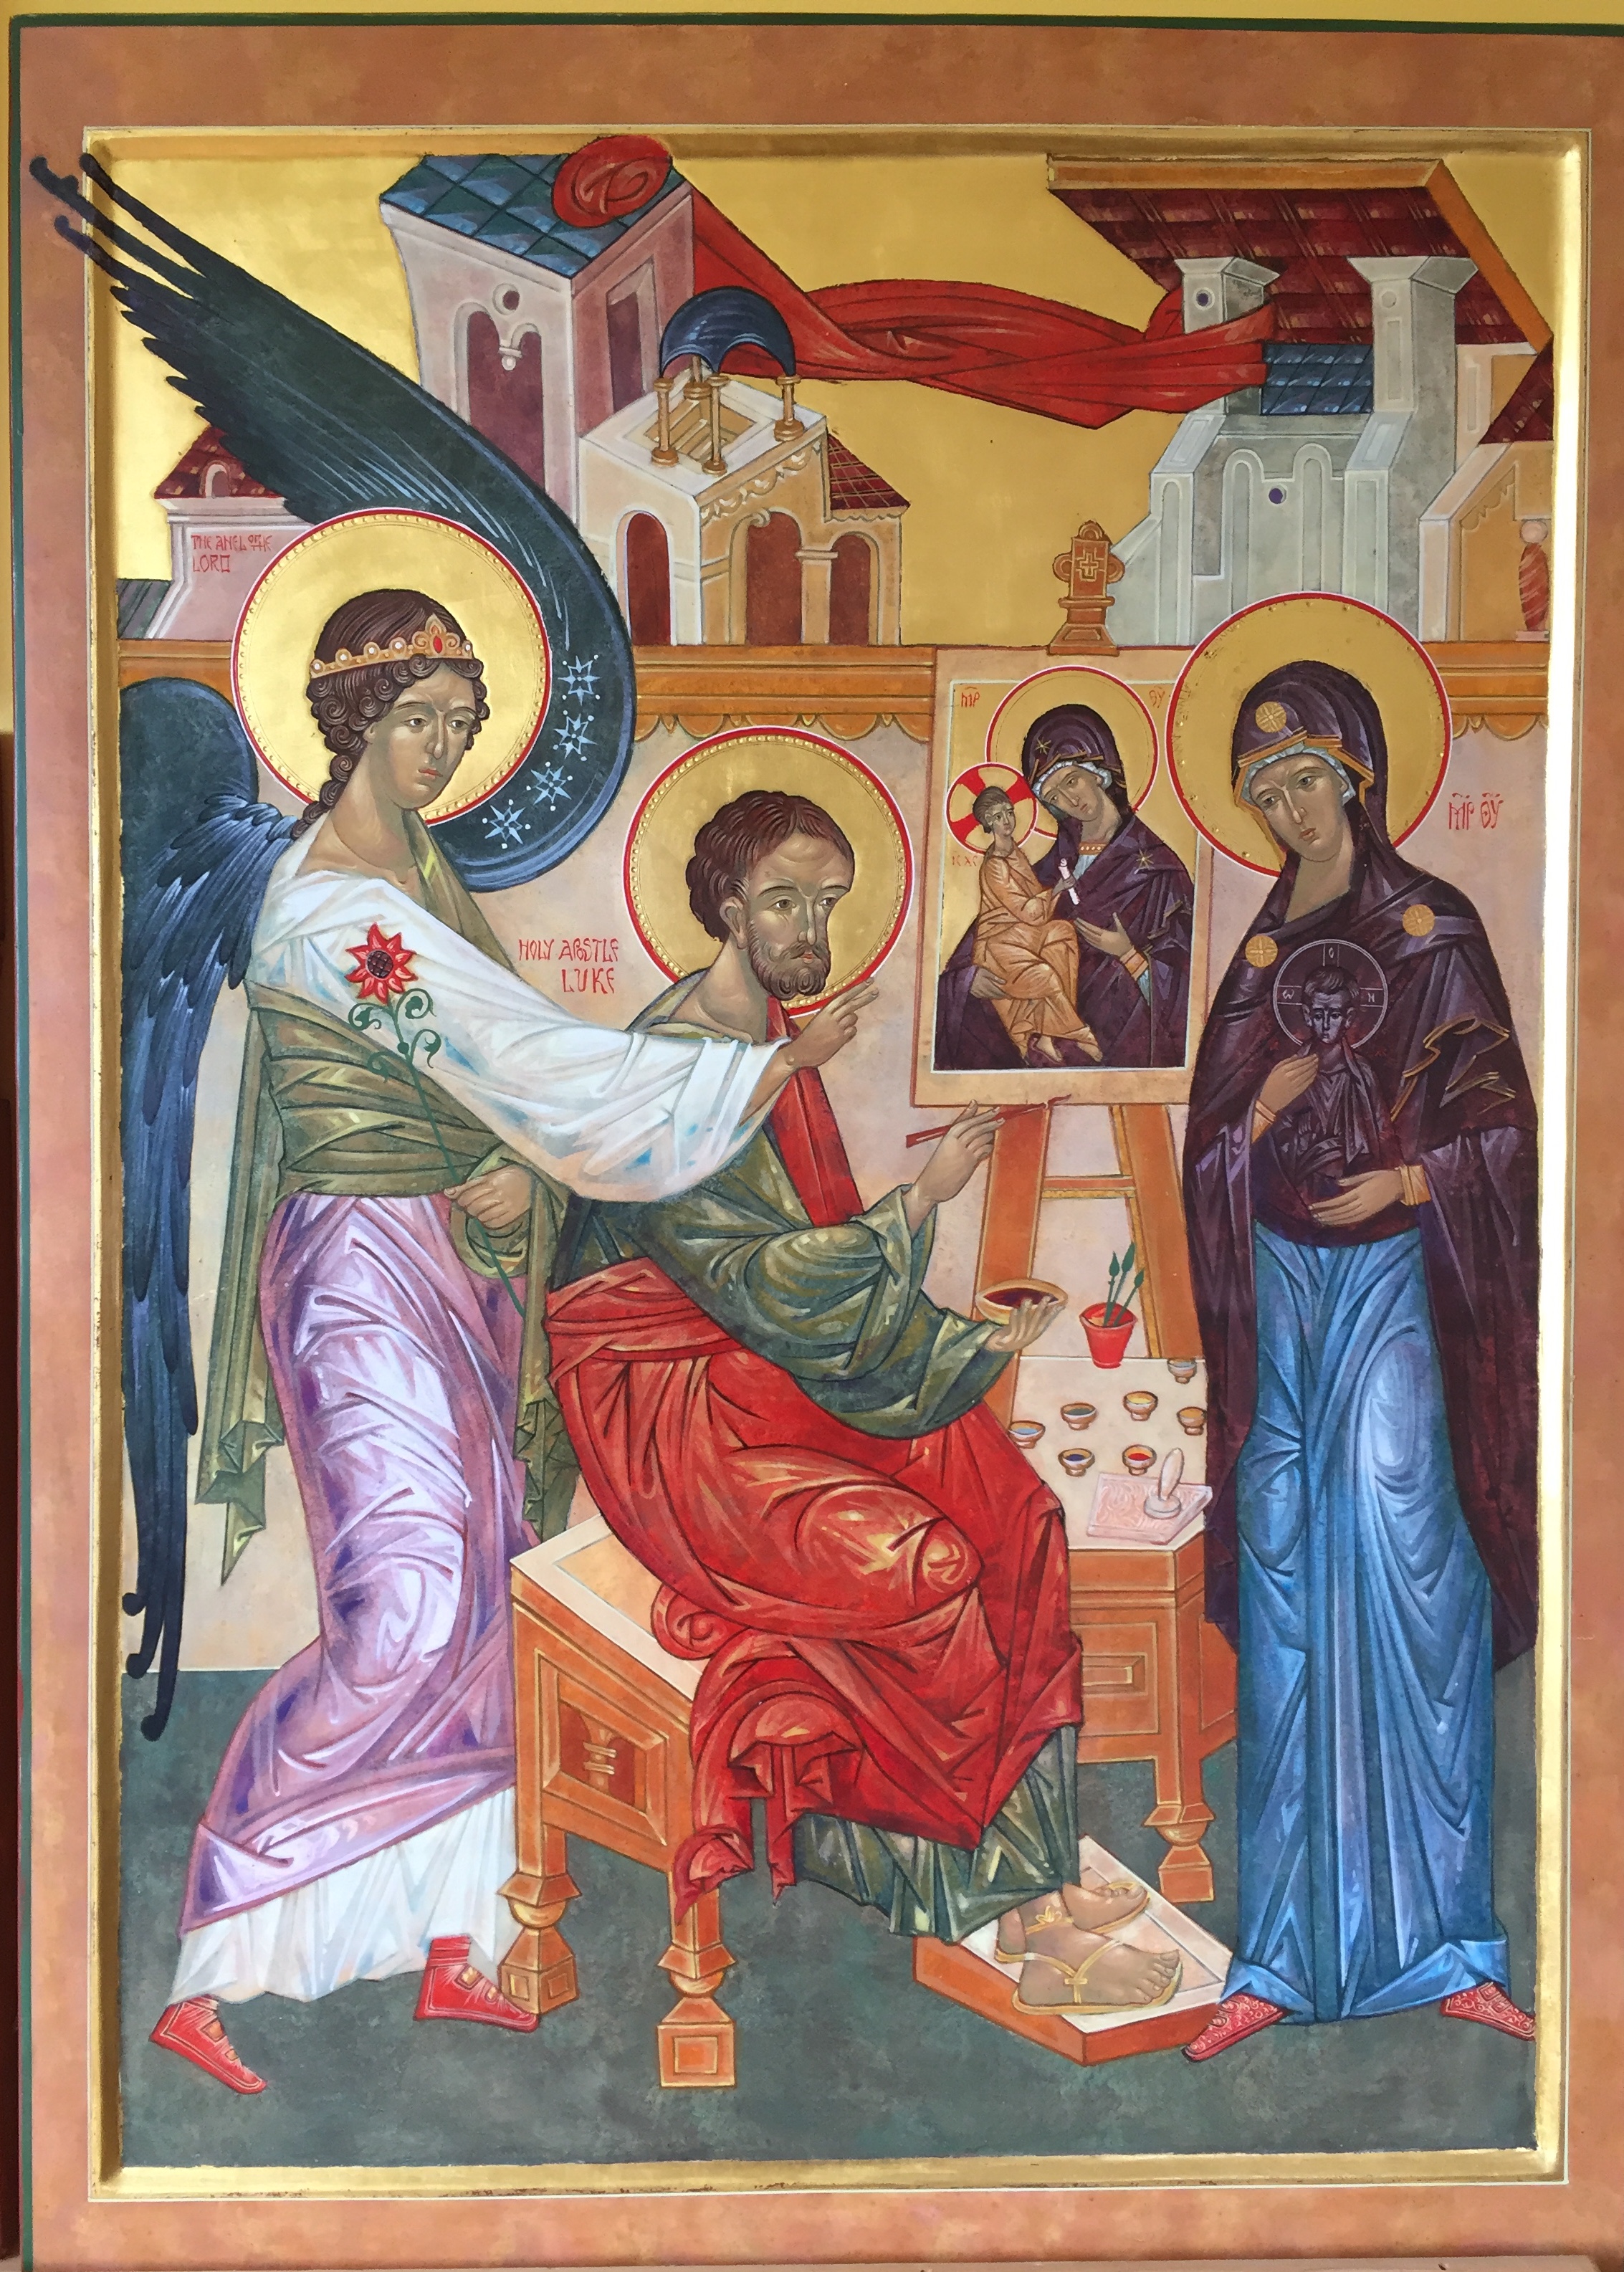 St Luke the Iconographer